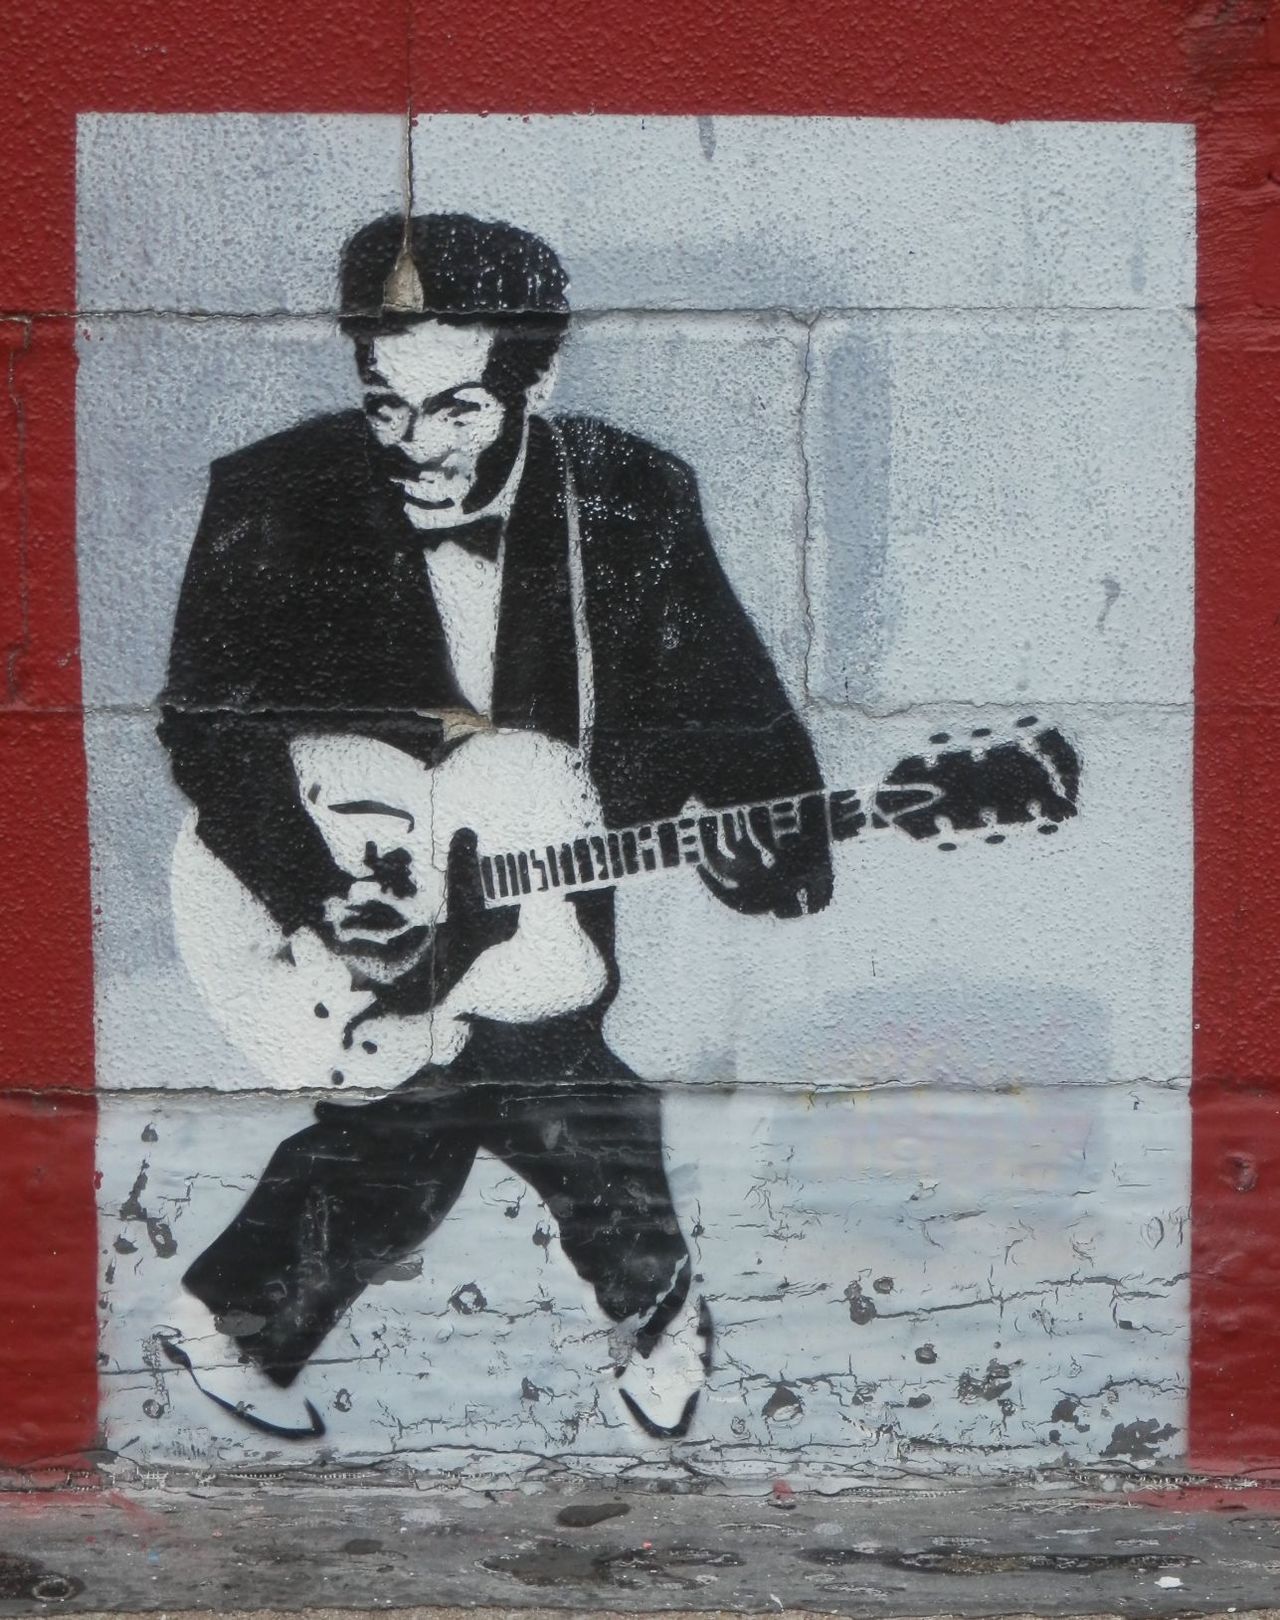 #StreetartSaturday #Graffiti Great #Dallas #Stencil #Streetart picture of Chuck Berry. https://t.co/K1H71nhTUc